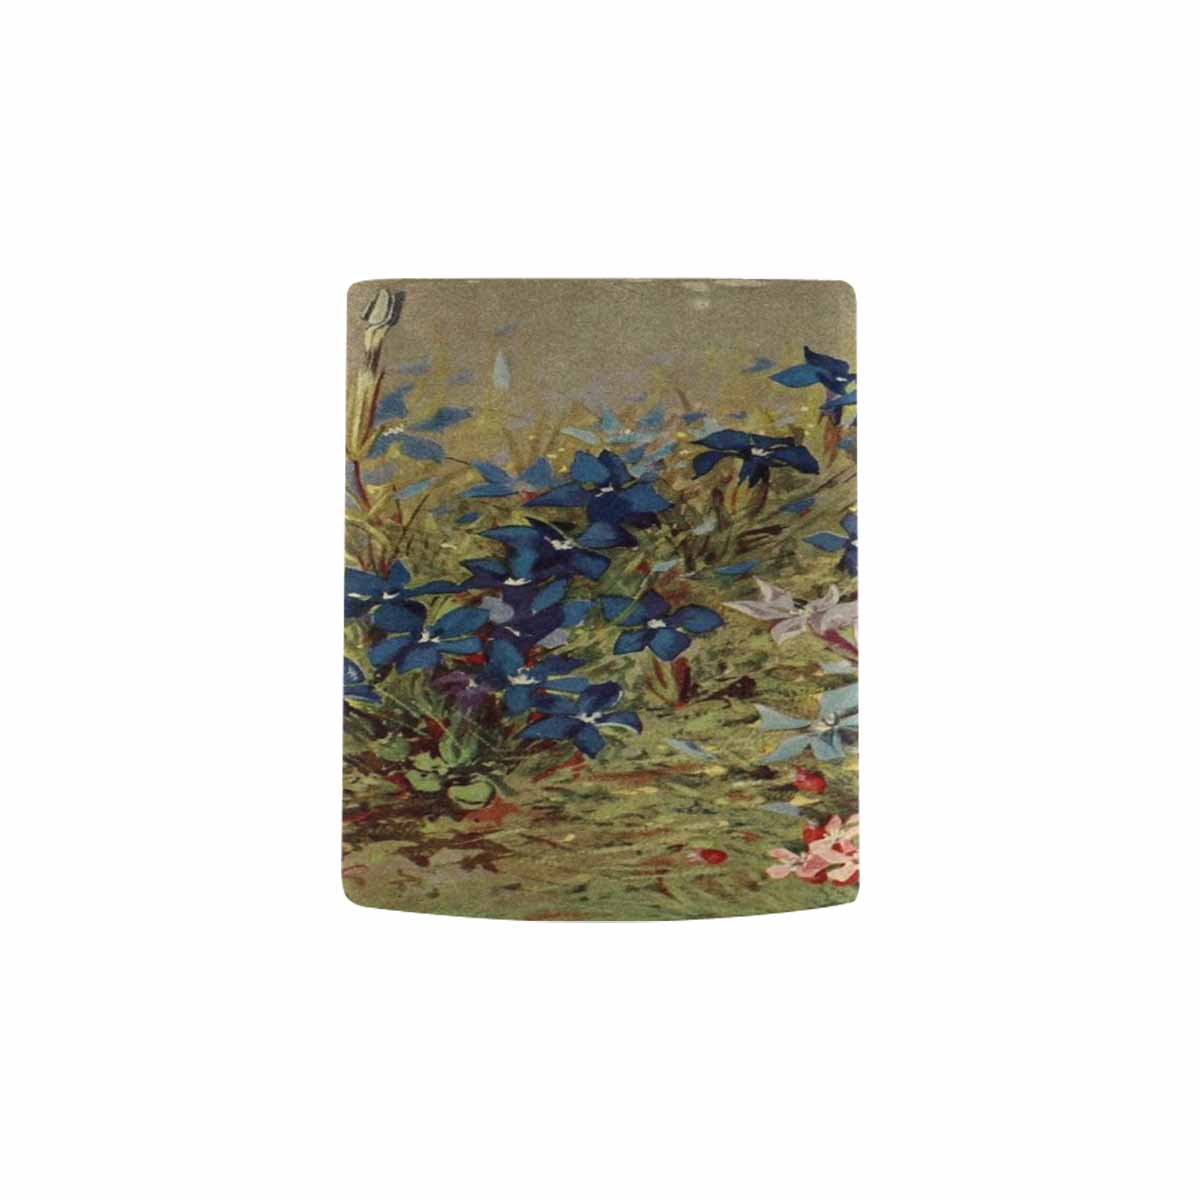 Vintage floral coffee mug or tea cup, Design 39